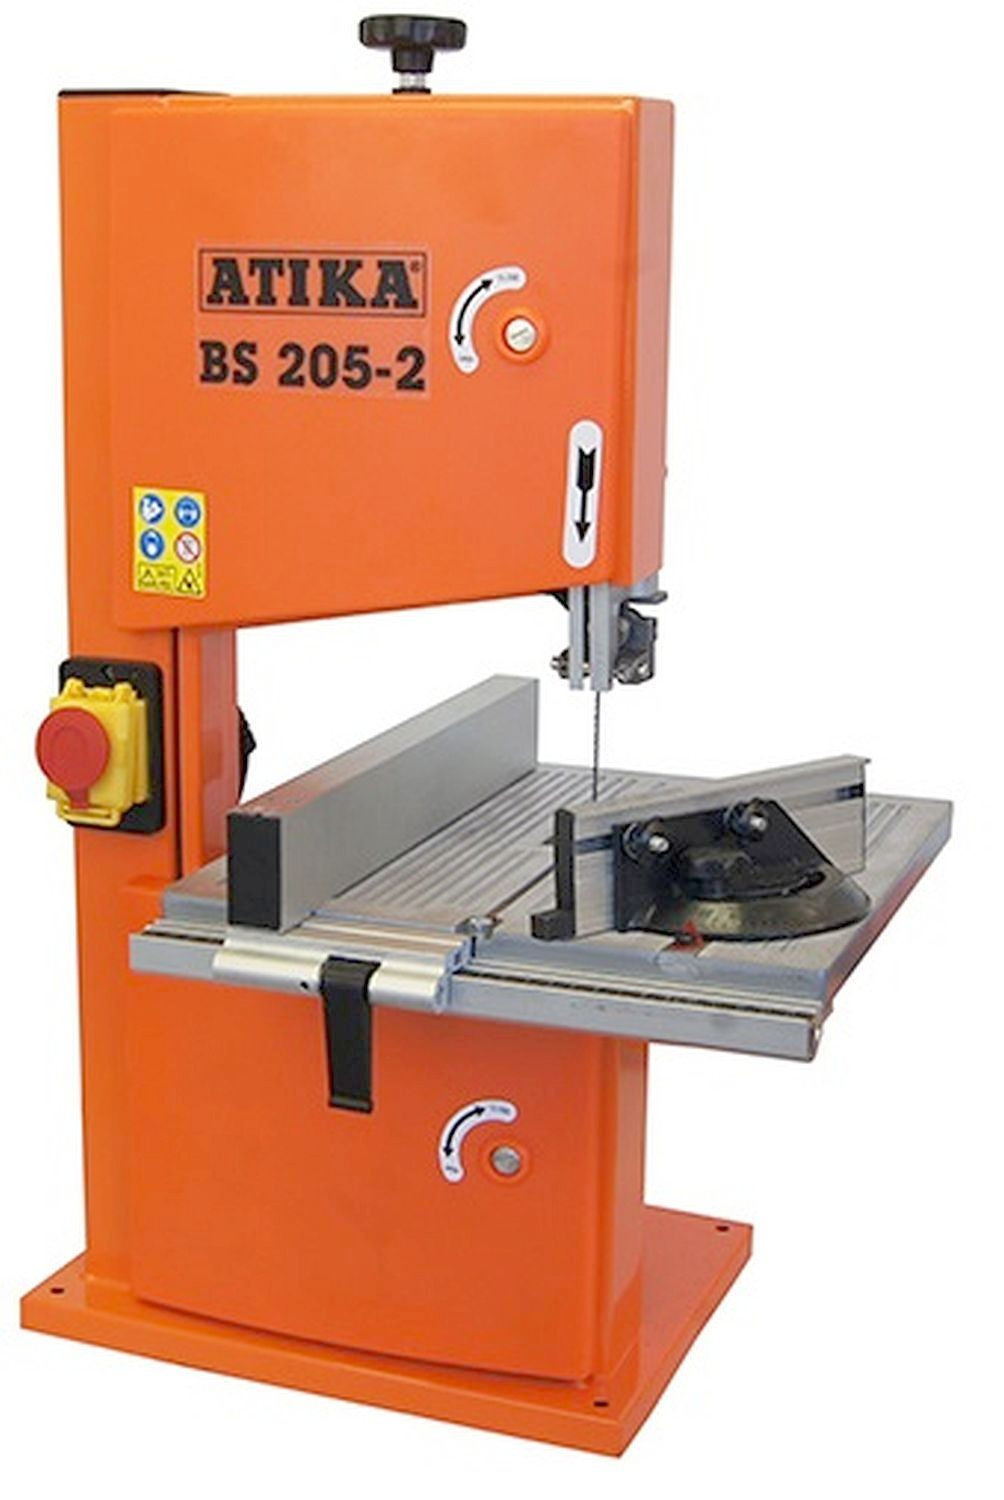 Bandsäge Atika BS 205-2 kompakt und vielseitig für präzise Sägearbeiten